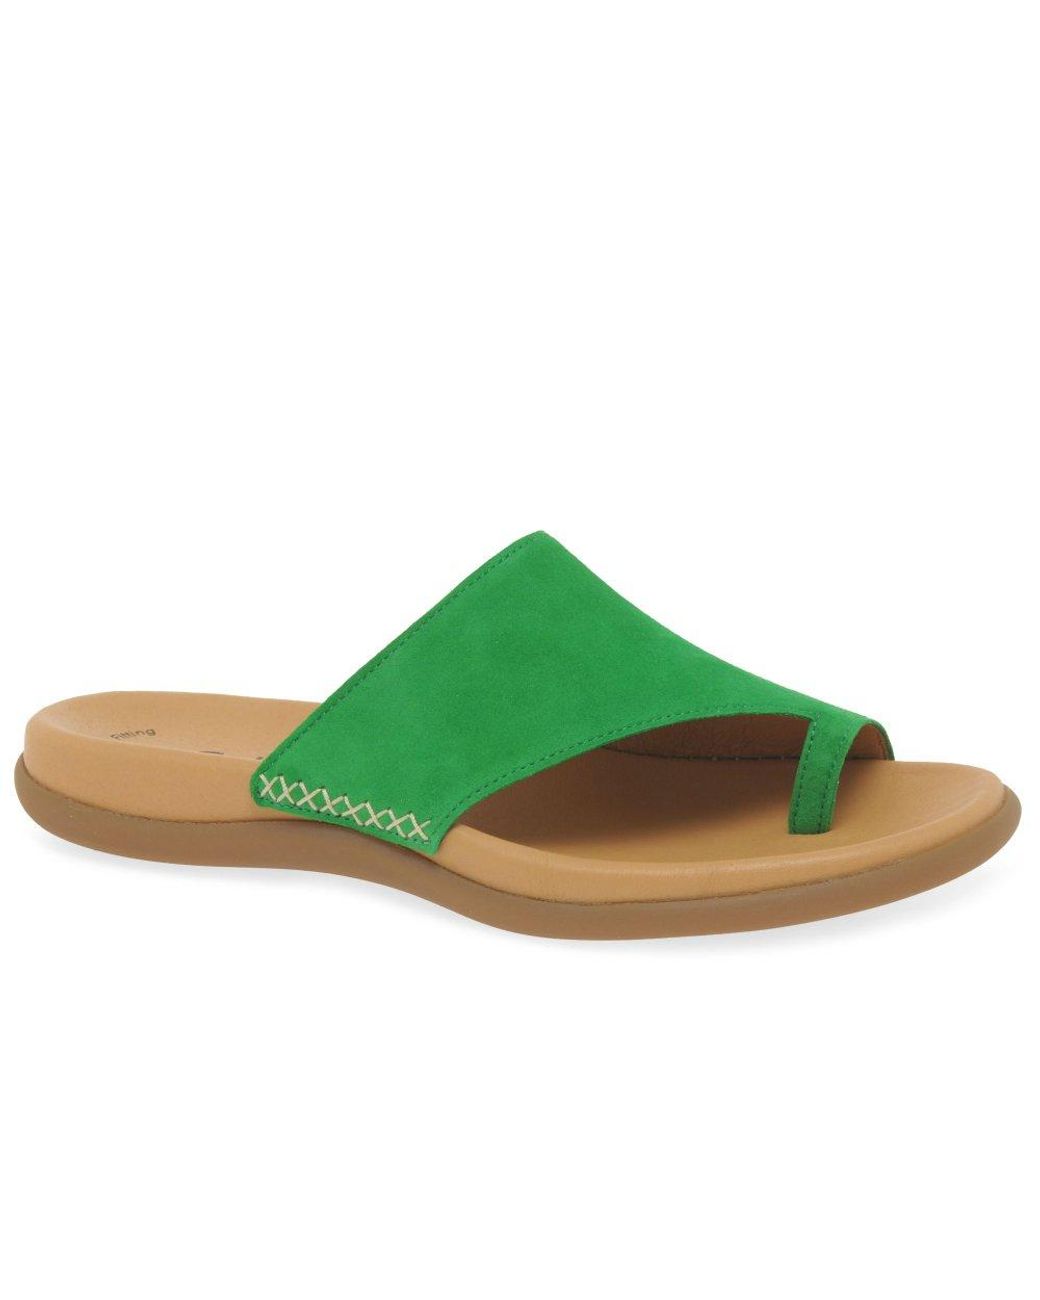 Gabor Lanzarote Toe Post Sandals in Green | Lyst Australia